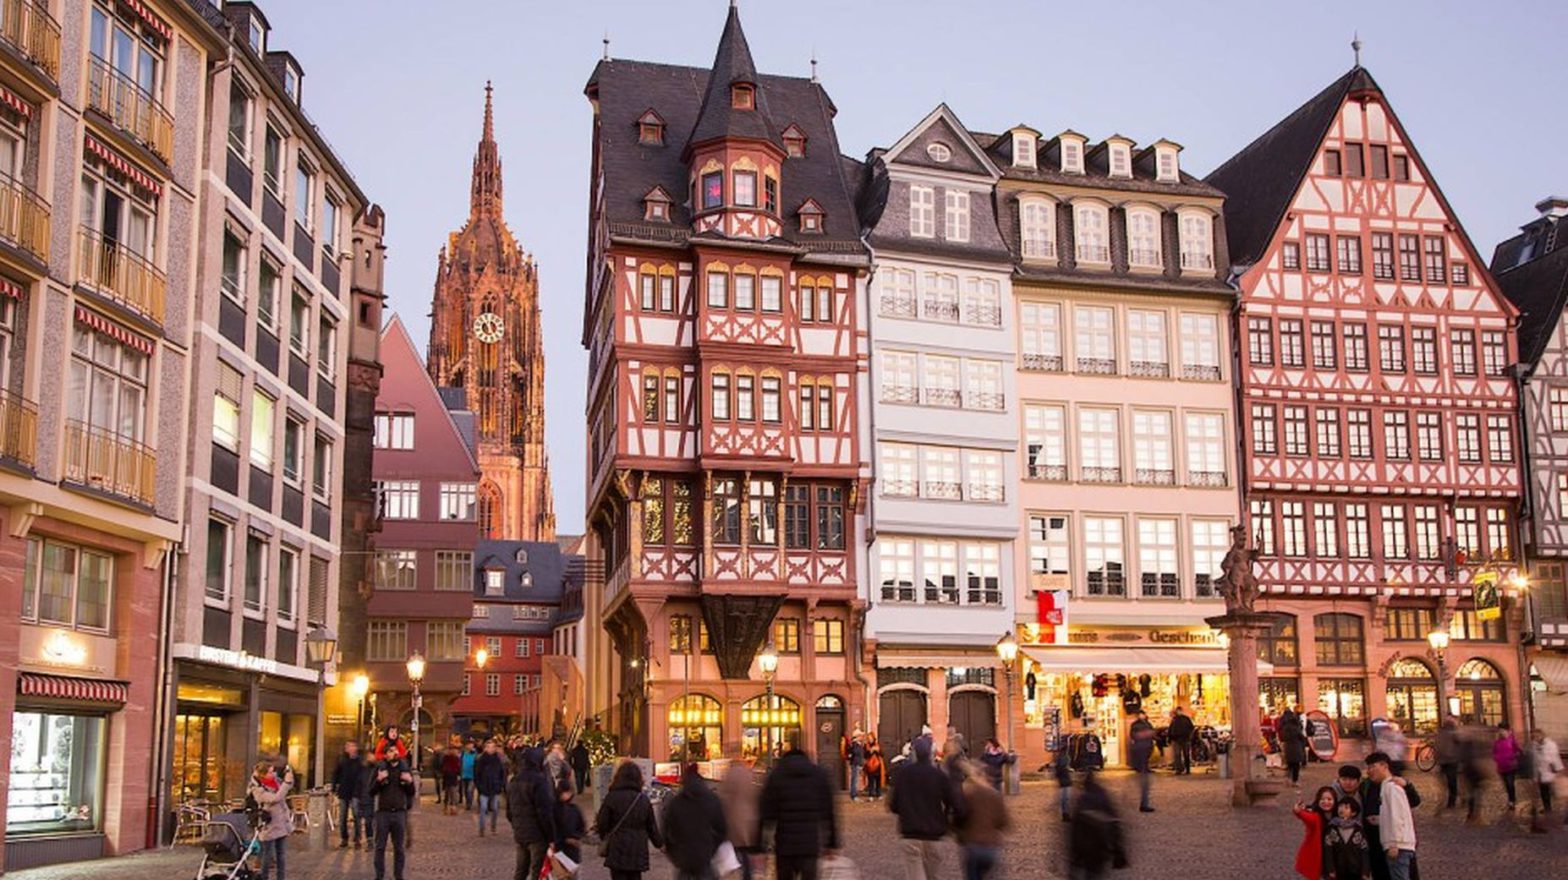 Historic charm of half-timbered buildings in the Pomerberg in Frankfurt